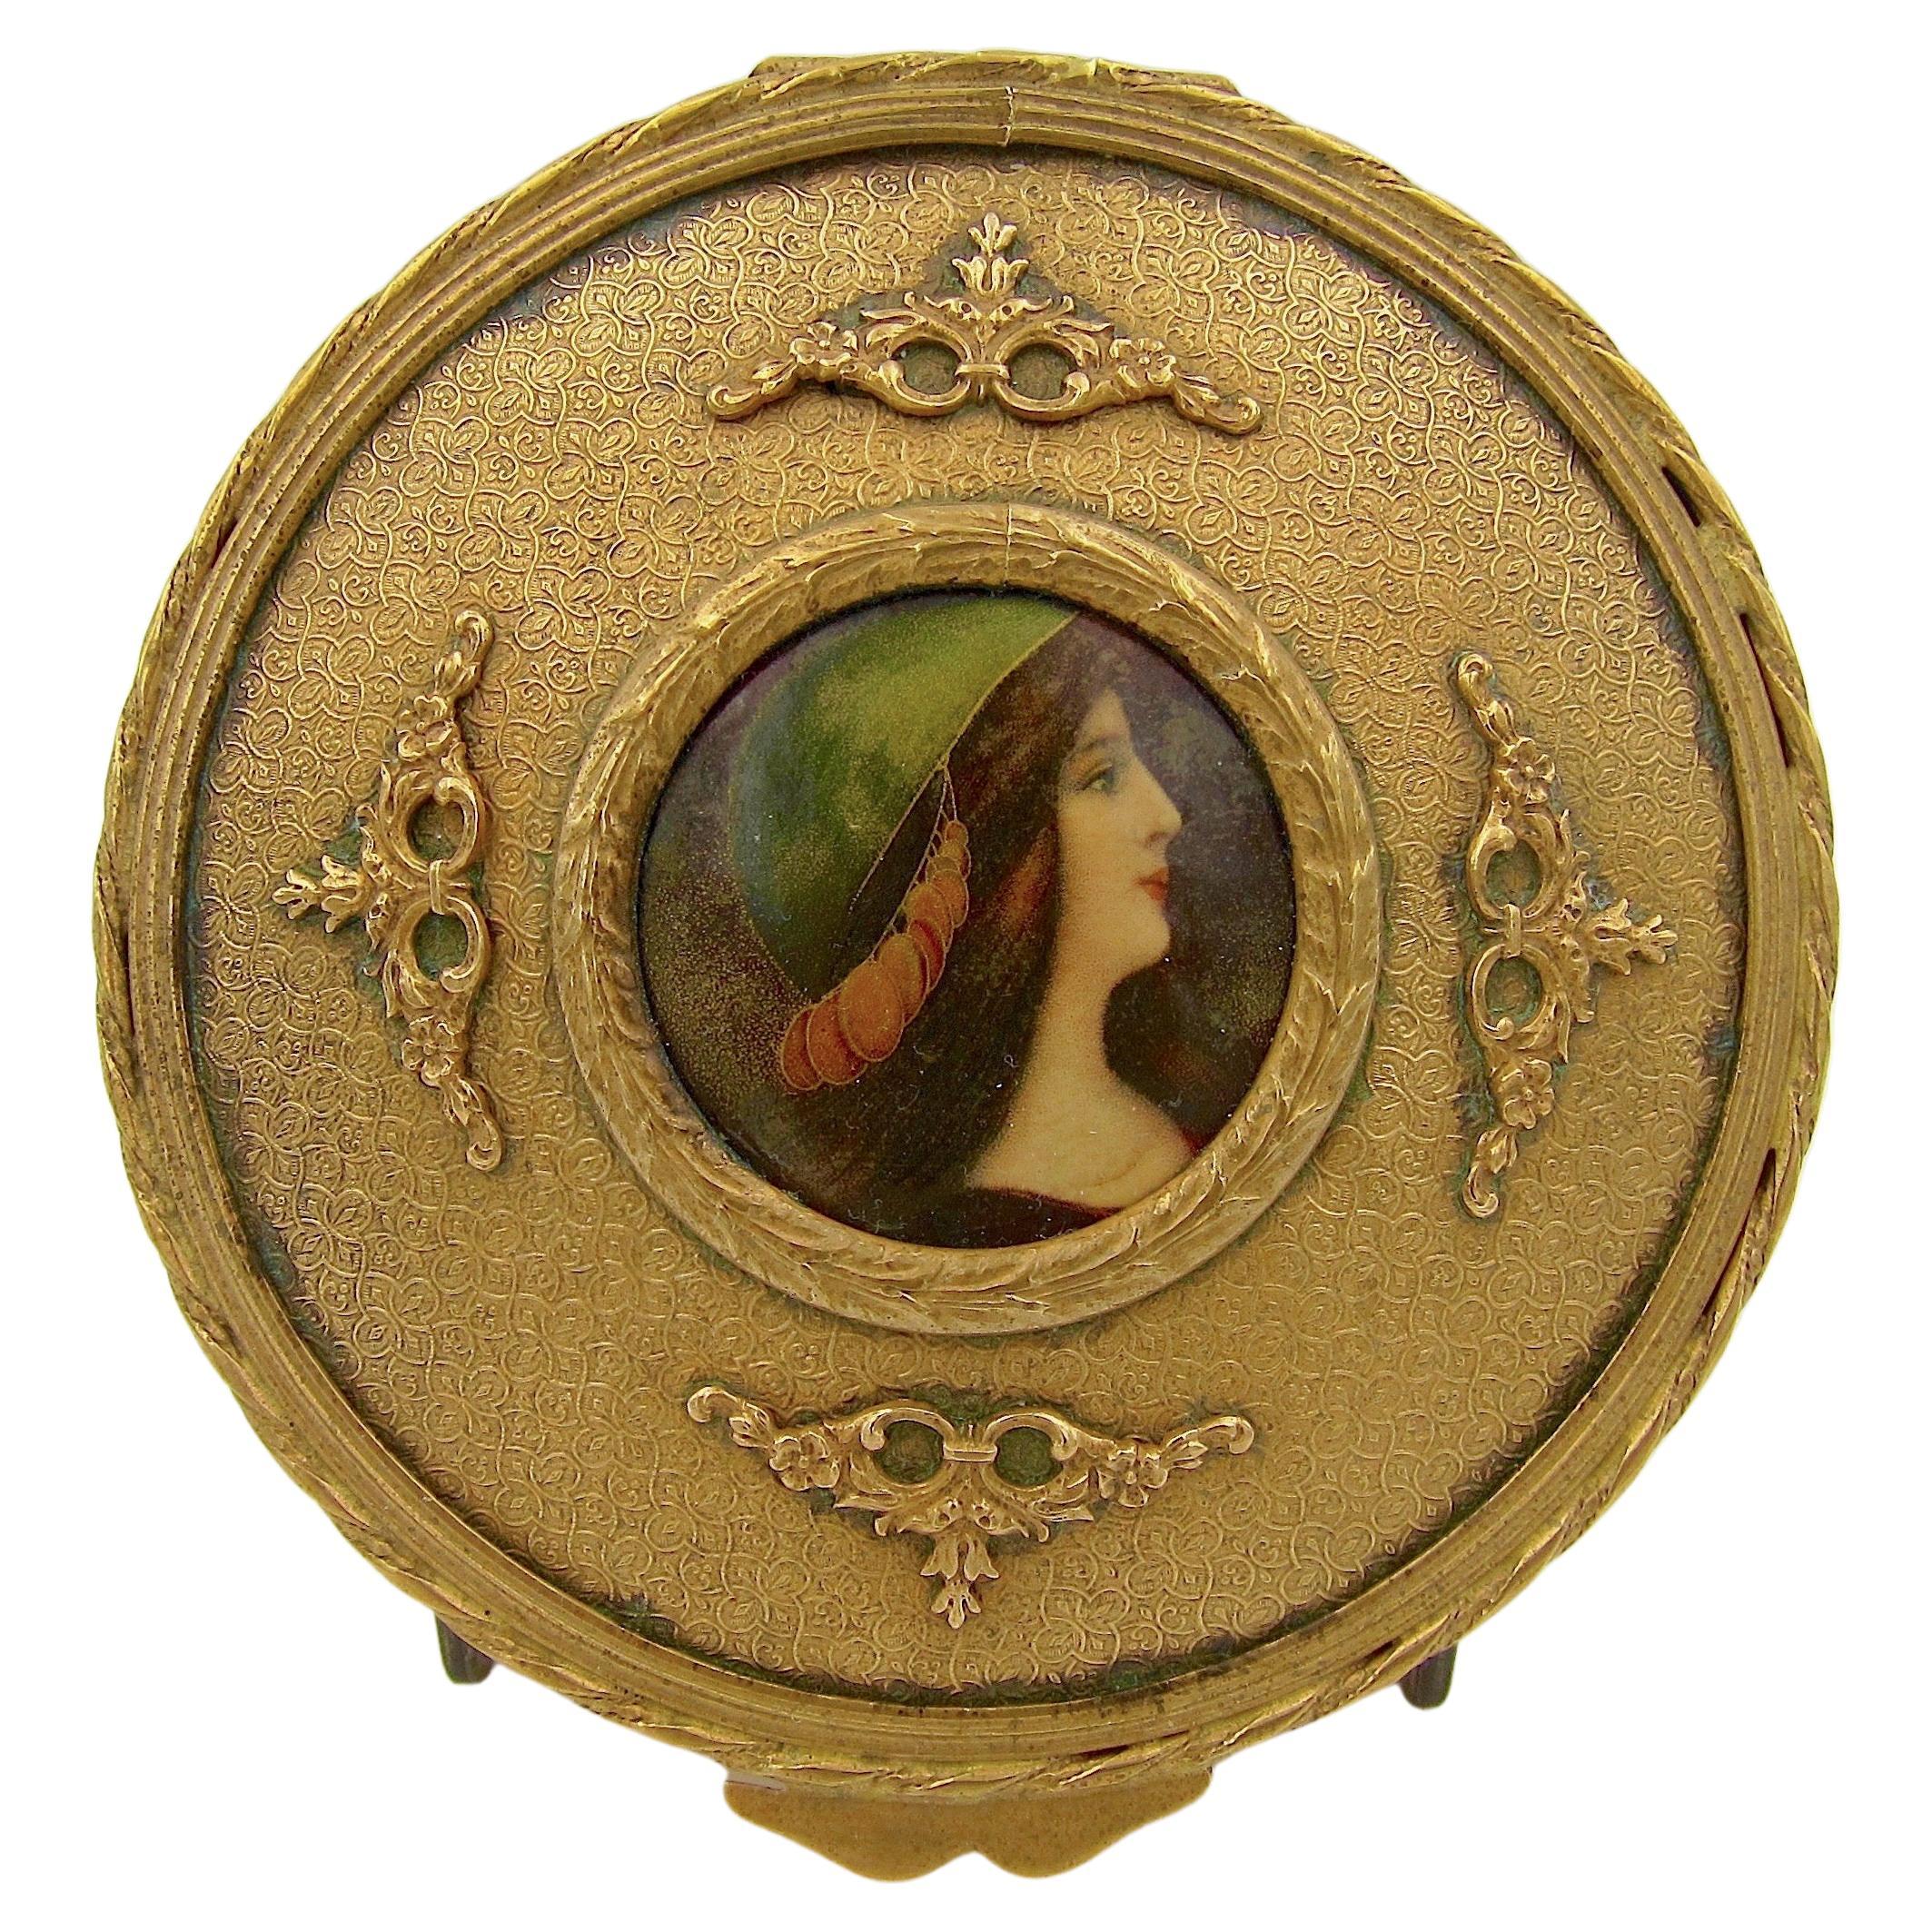 Antique French Gilt Bronze Vanity Box with an Enamel Portrait